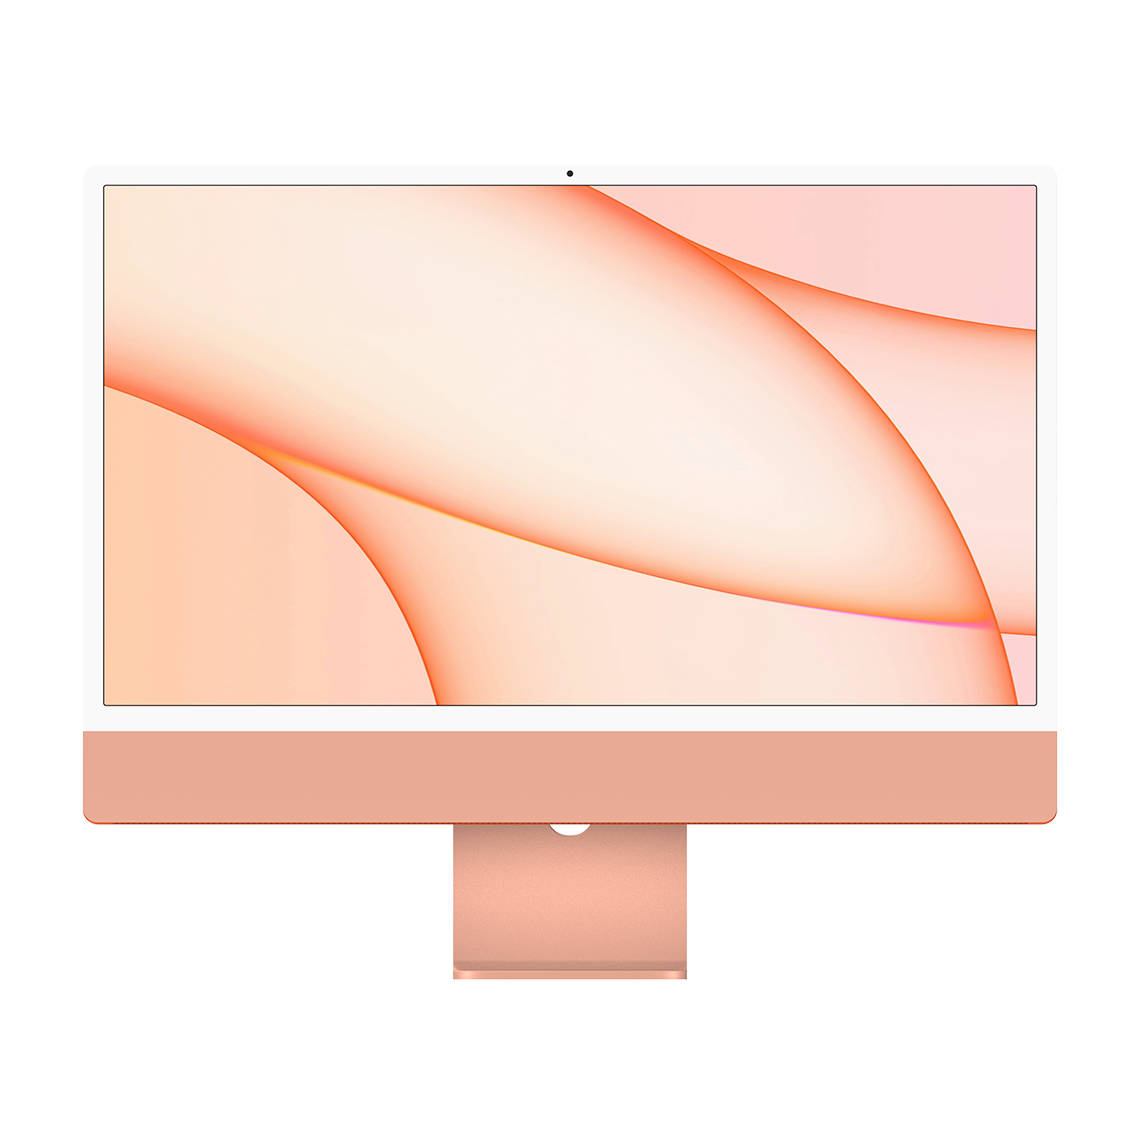 Apple M1 iMac 24-inch - Orange - 8GB RAM, 256GB Flash, 8-Core GPU, 4 Ports, Open Box